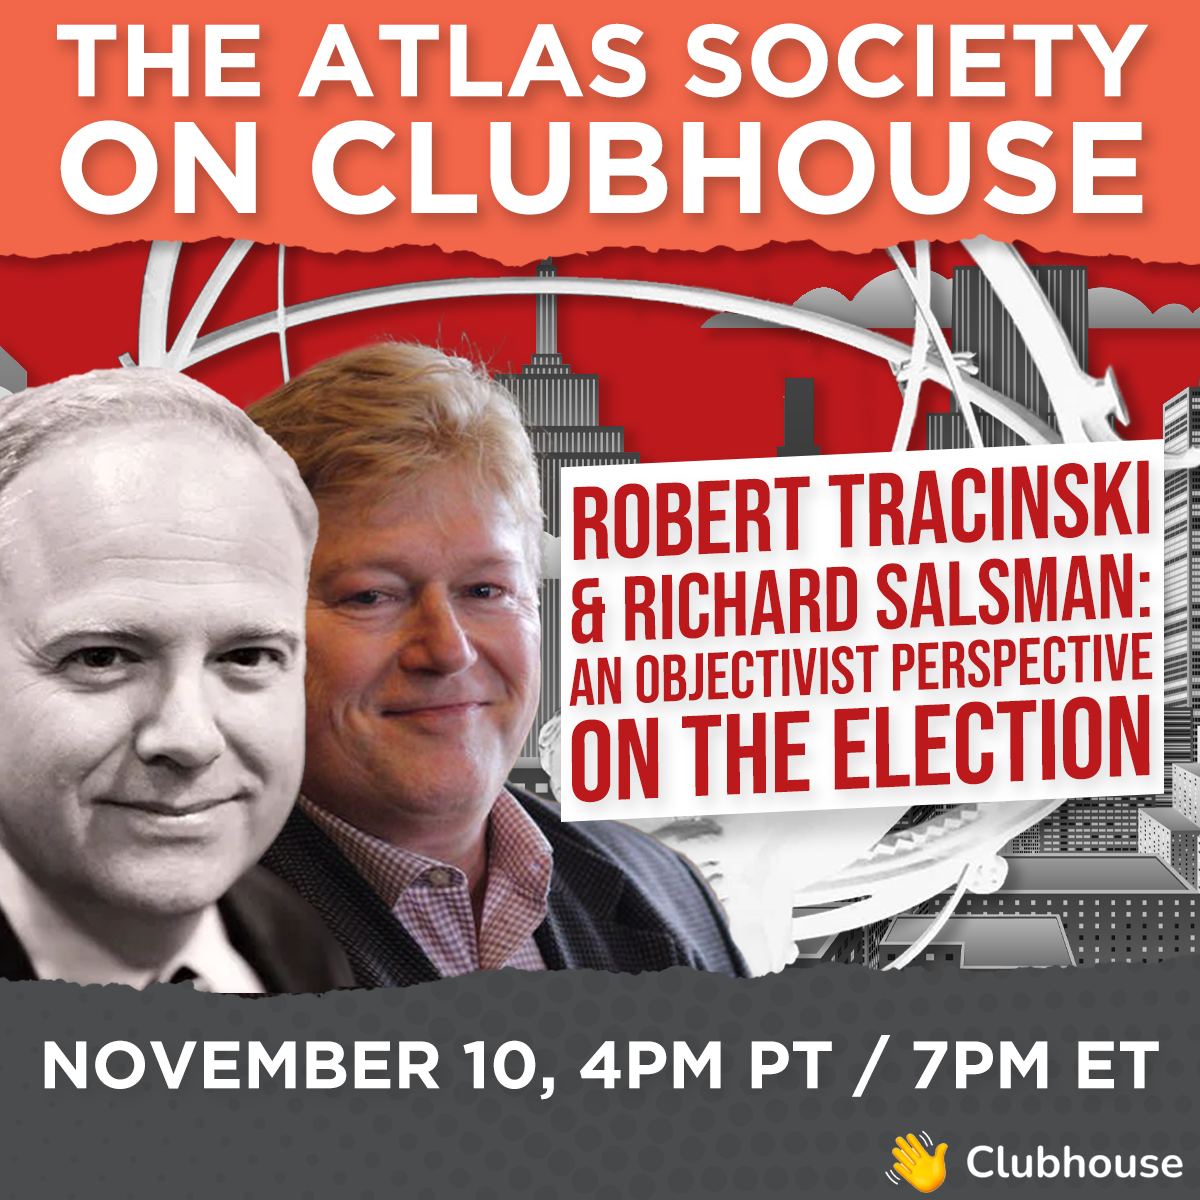 Richard Salsman & Robert Tracinski - An Objectivist Perspective on the Election